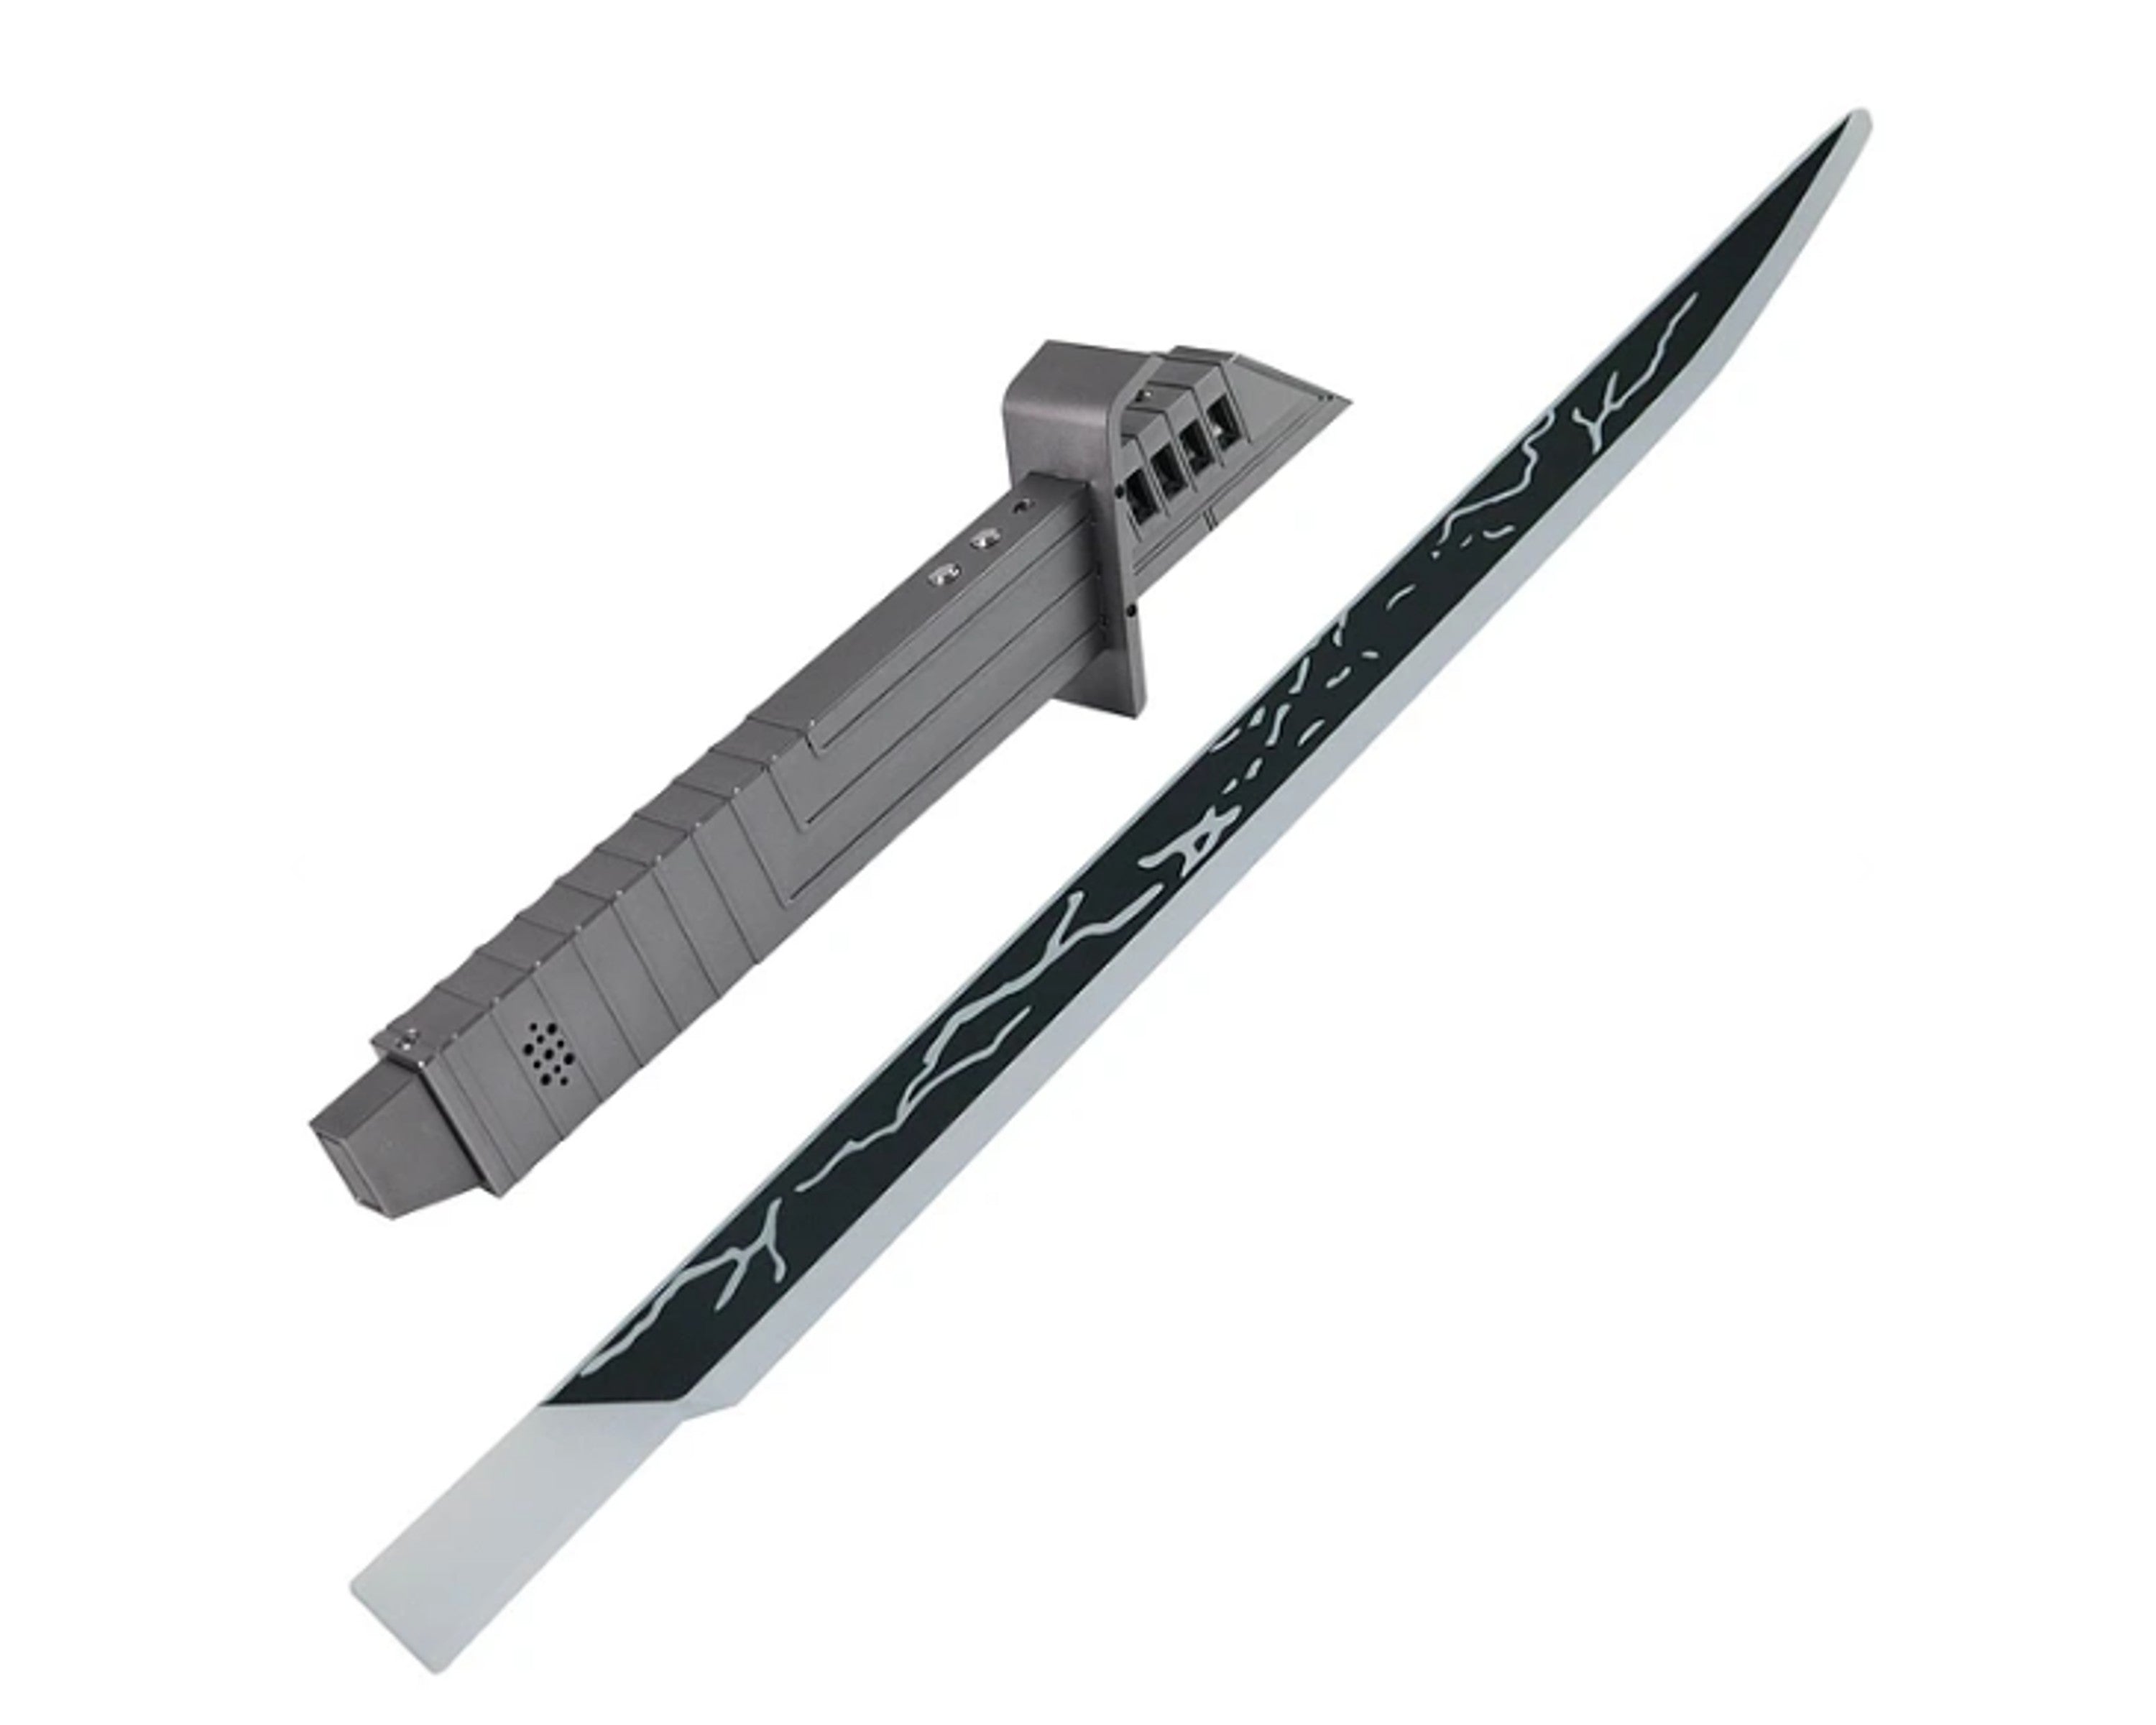 Mandalorian Darksaber Mandalorian Blade With Dark Blade 